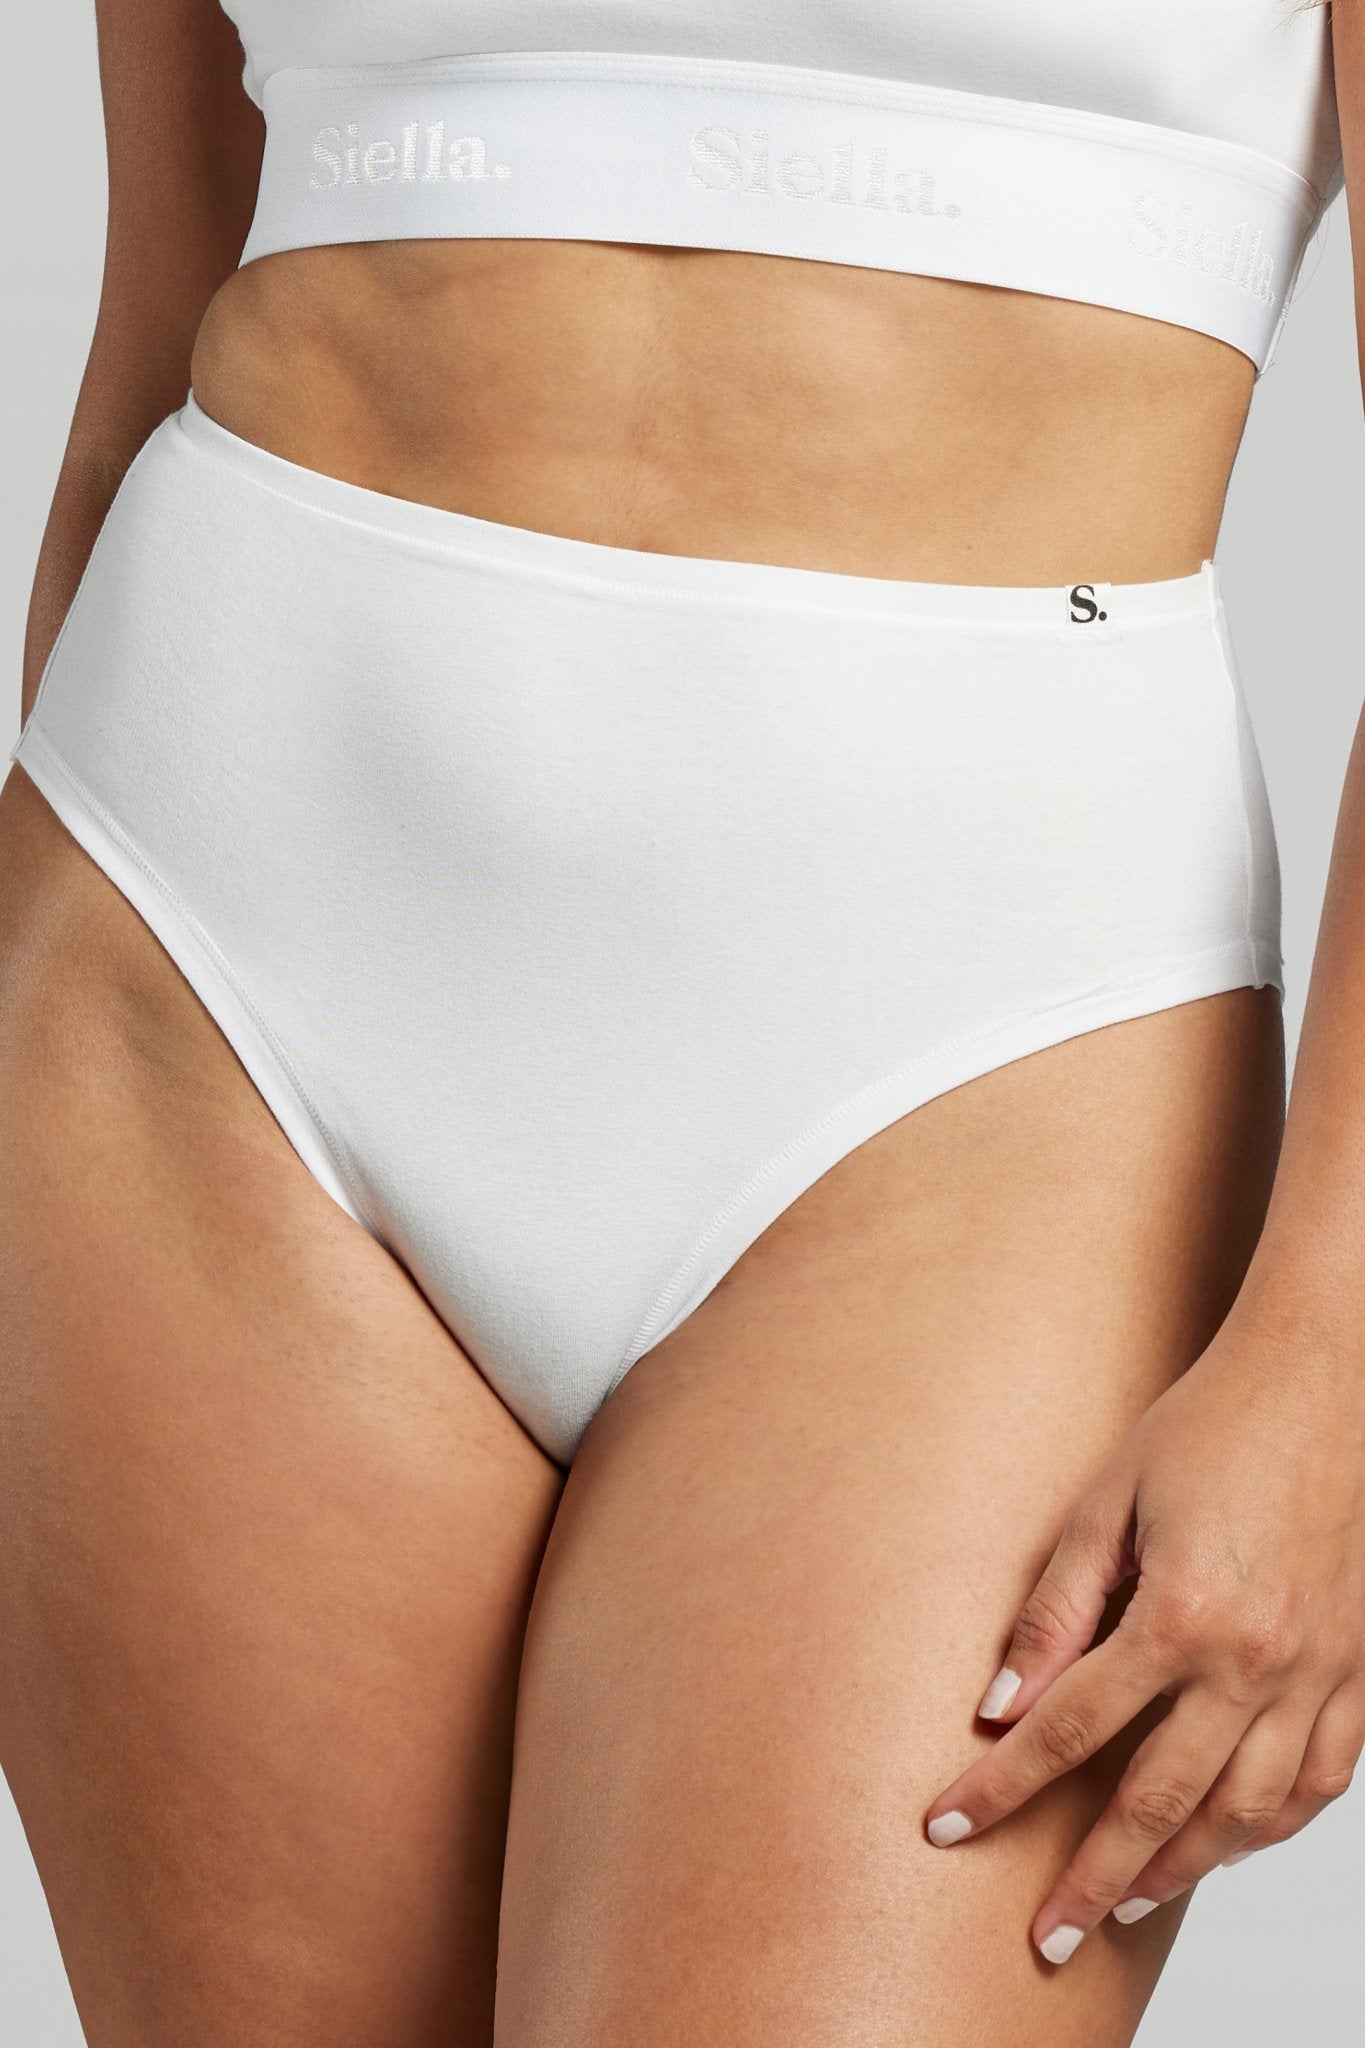 Seagull Adult Pants Women's Knickers Organic Cotton Underwear 